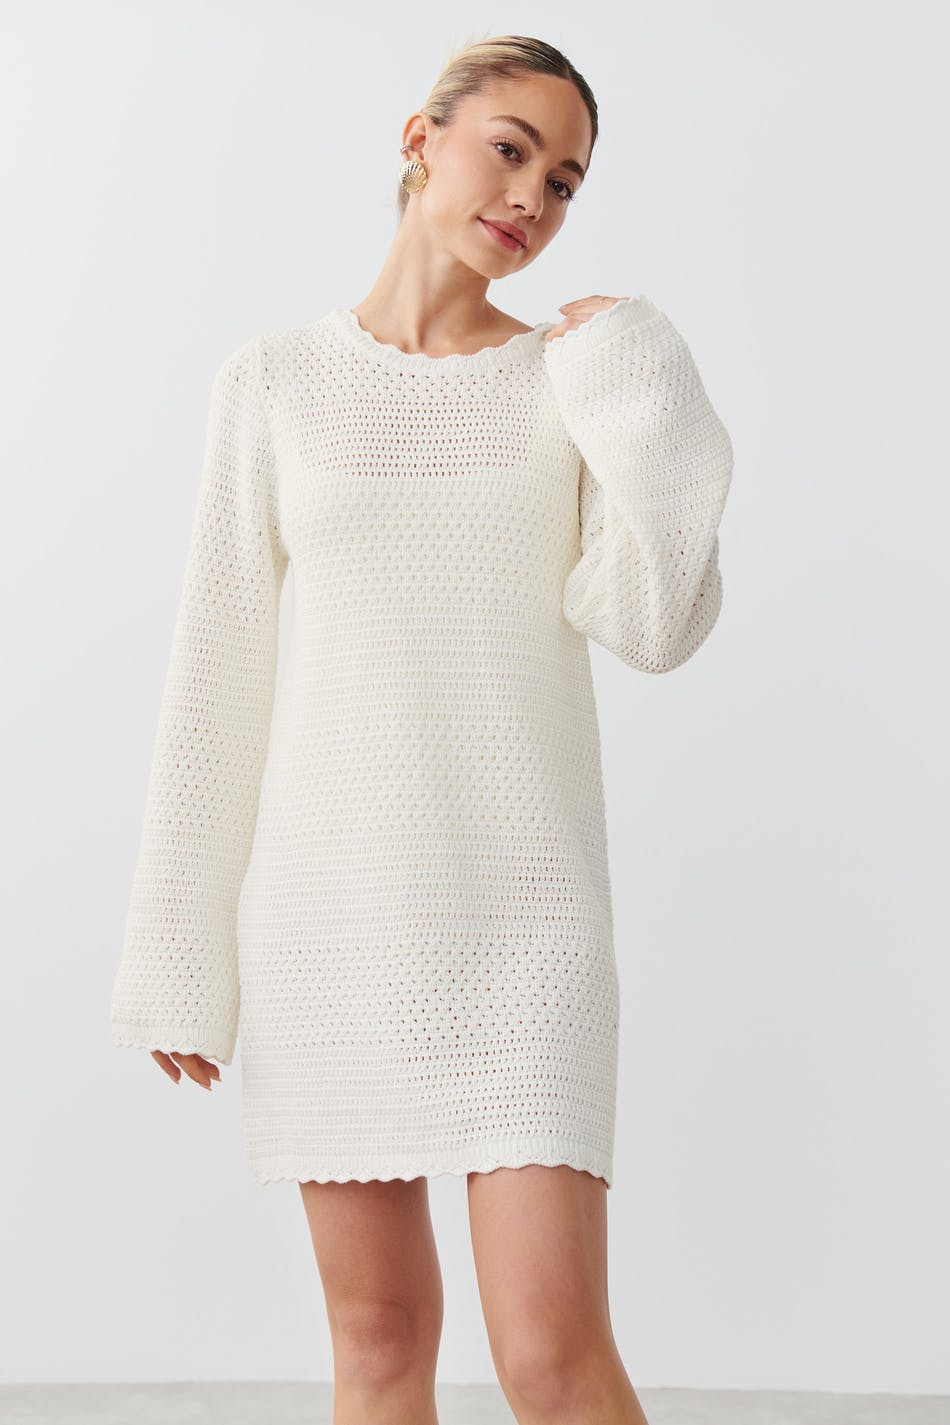 Claim To Love Crochet Dress in White